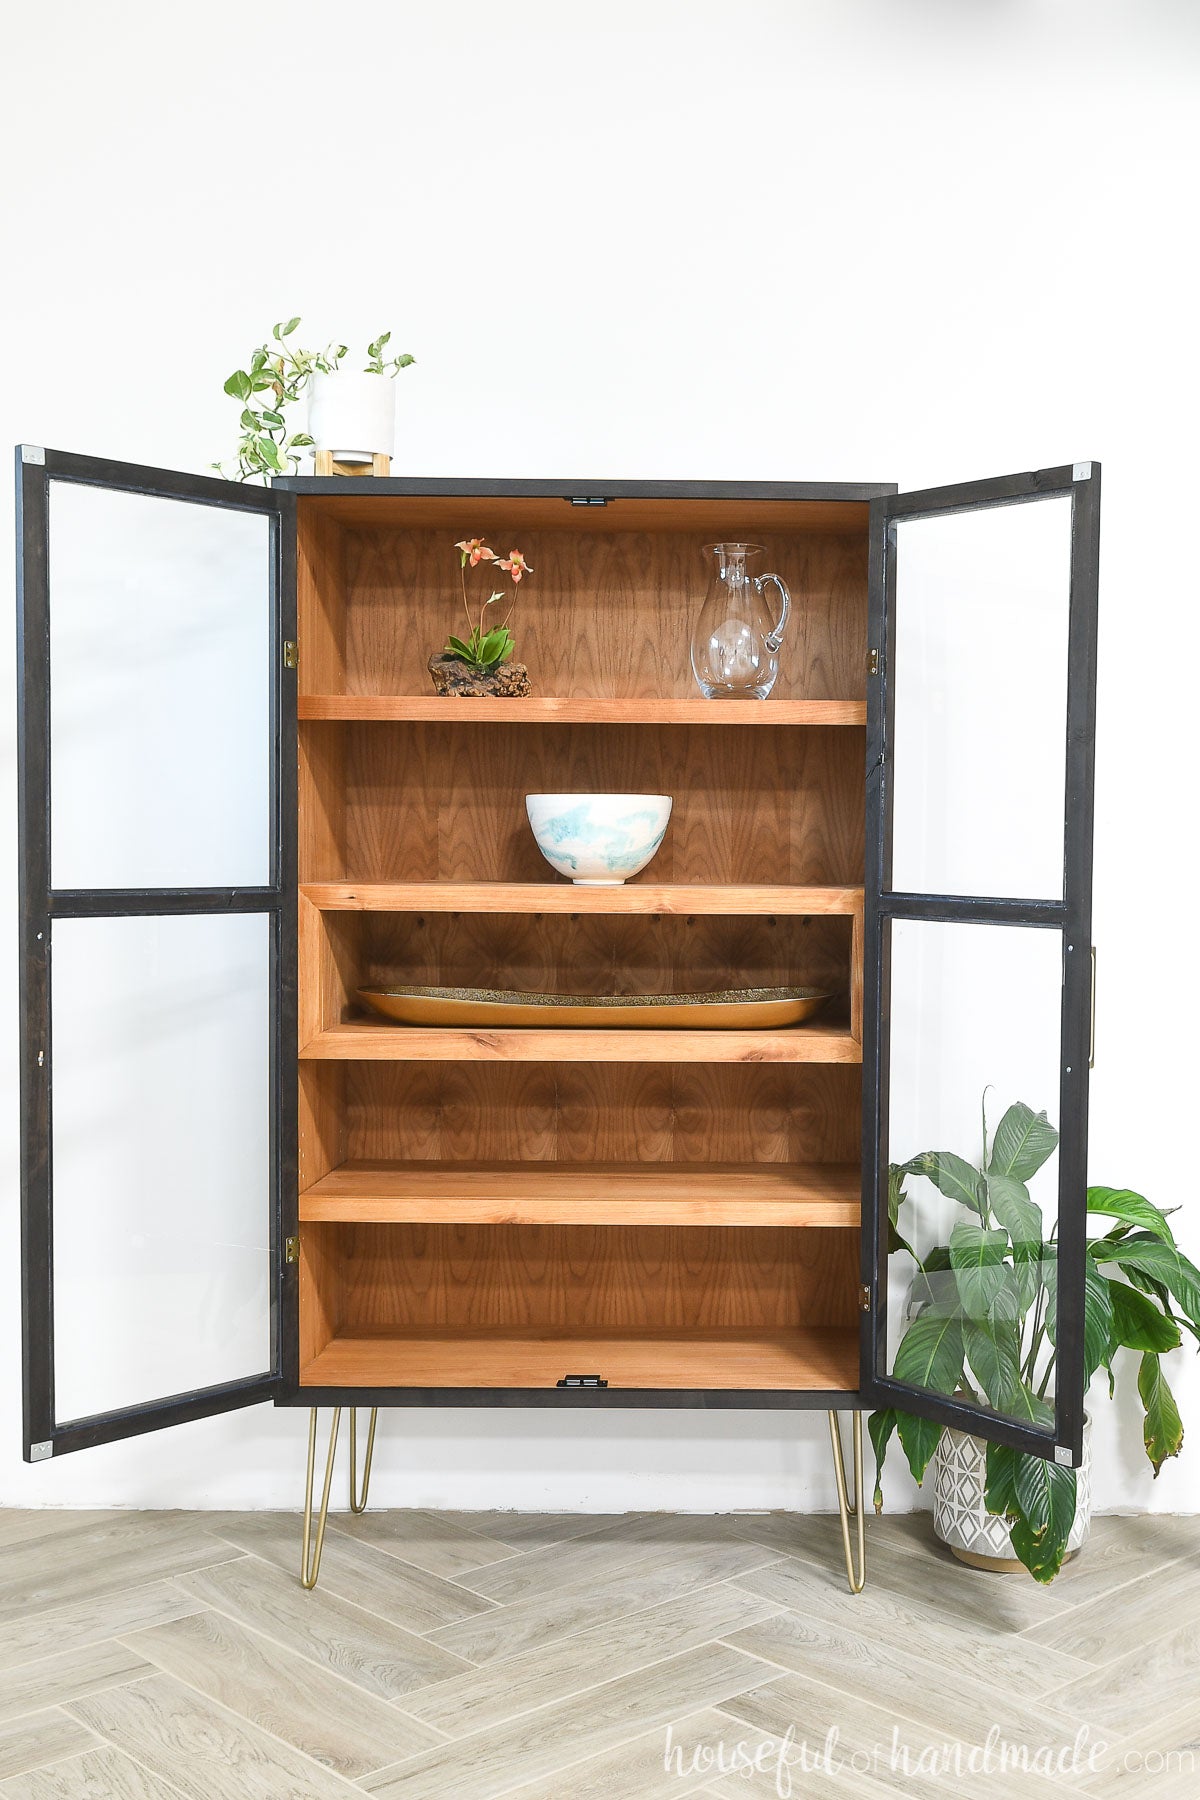 Woodworking Modern Display Houseful of Handmade Plans – Cabinet